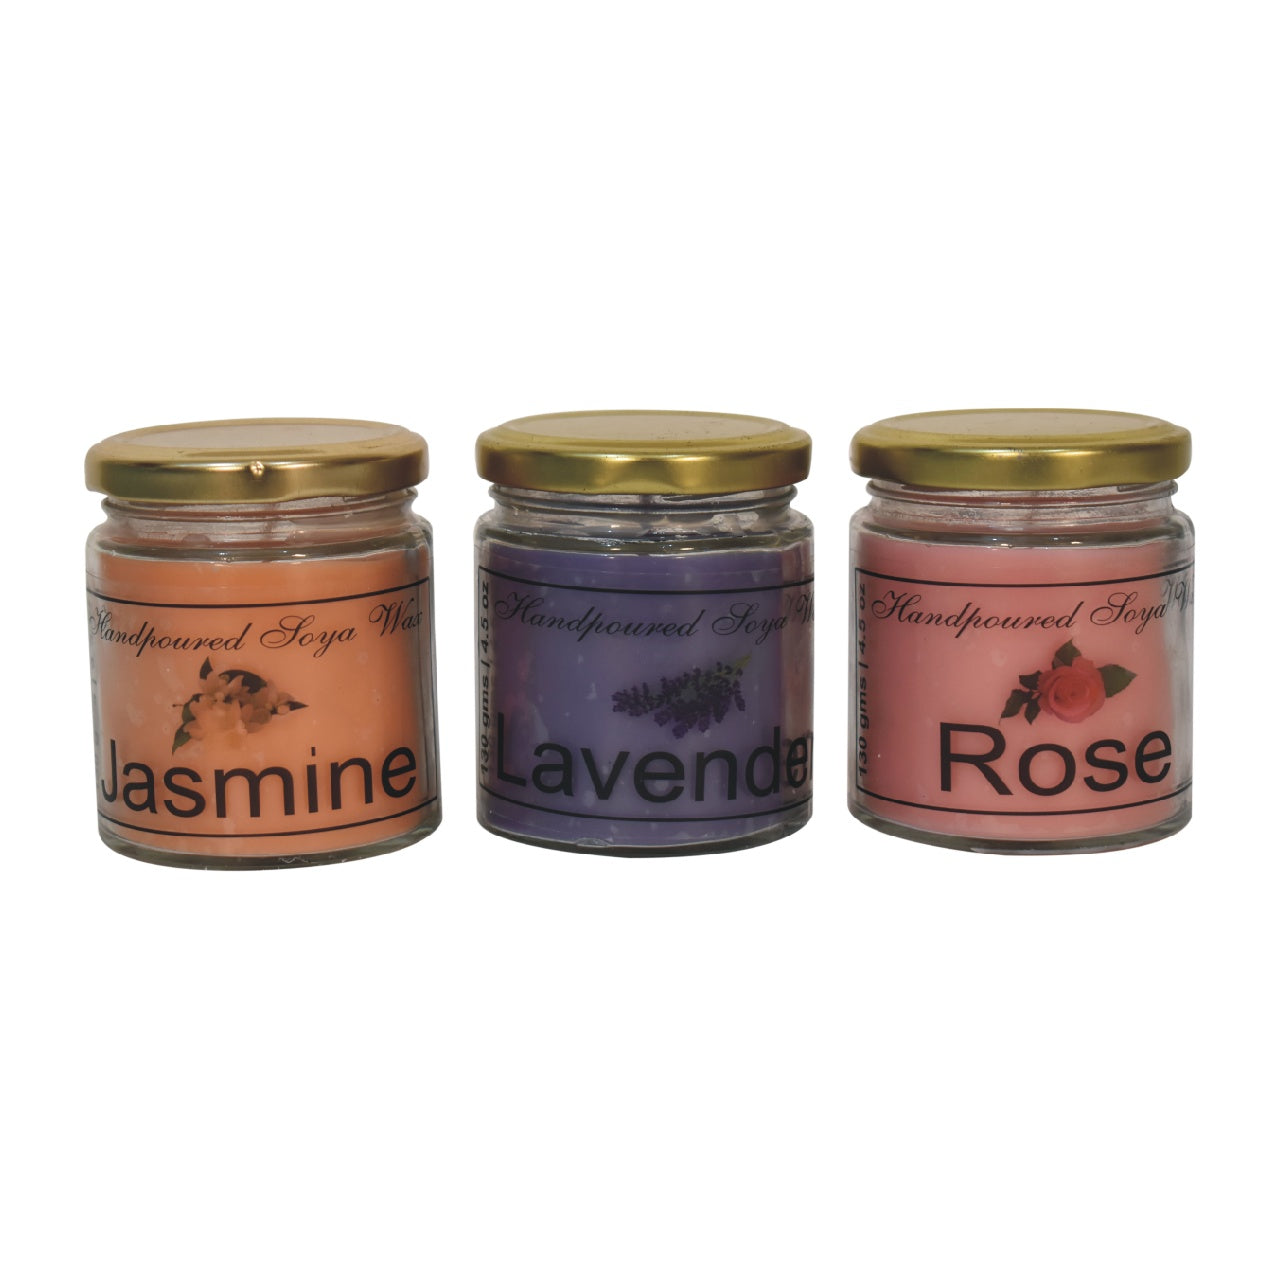 View Candle Gift Set of 3 Jasmine Lavender Rose information